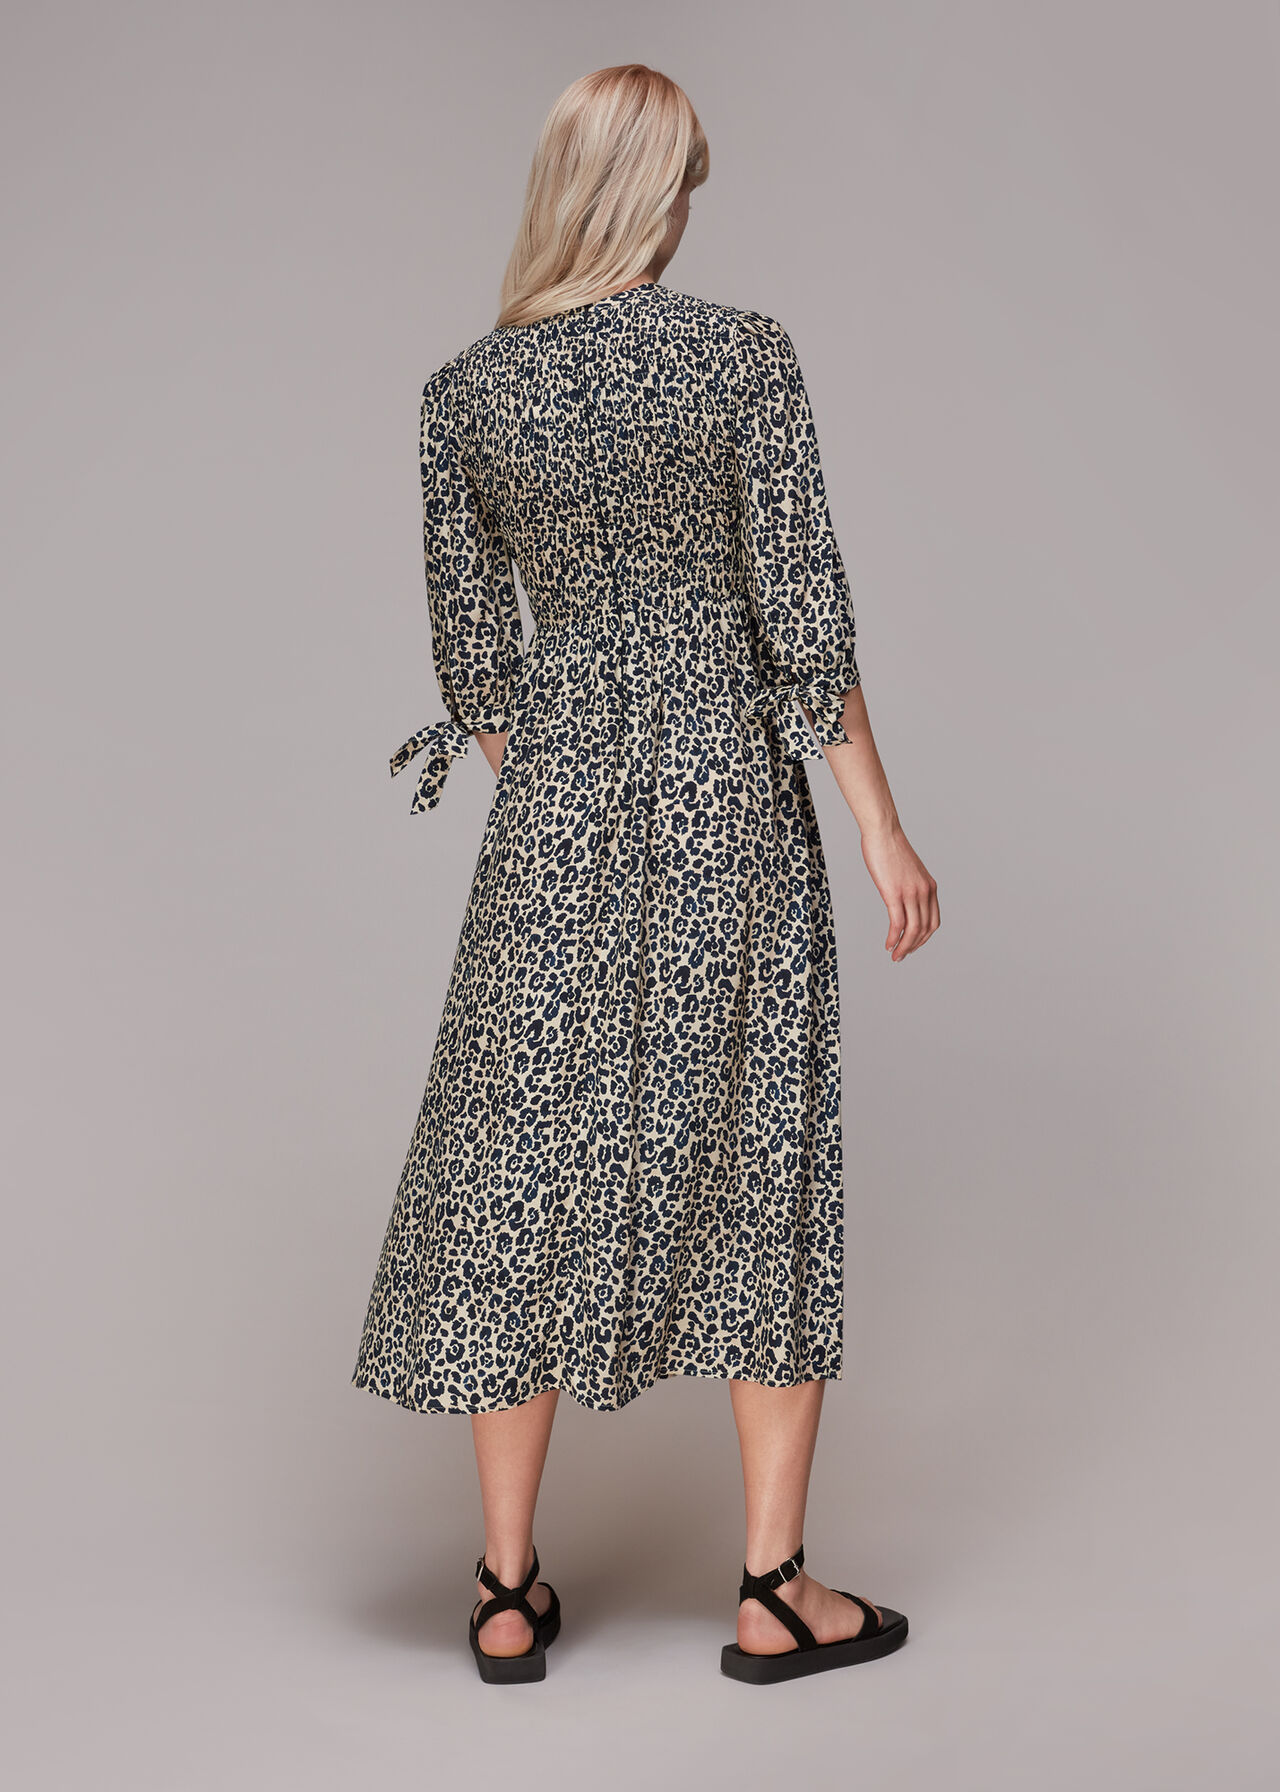 Cheetah Print Shirred Dress